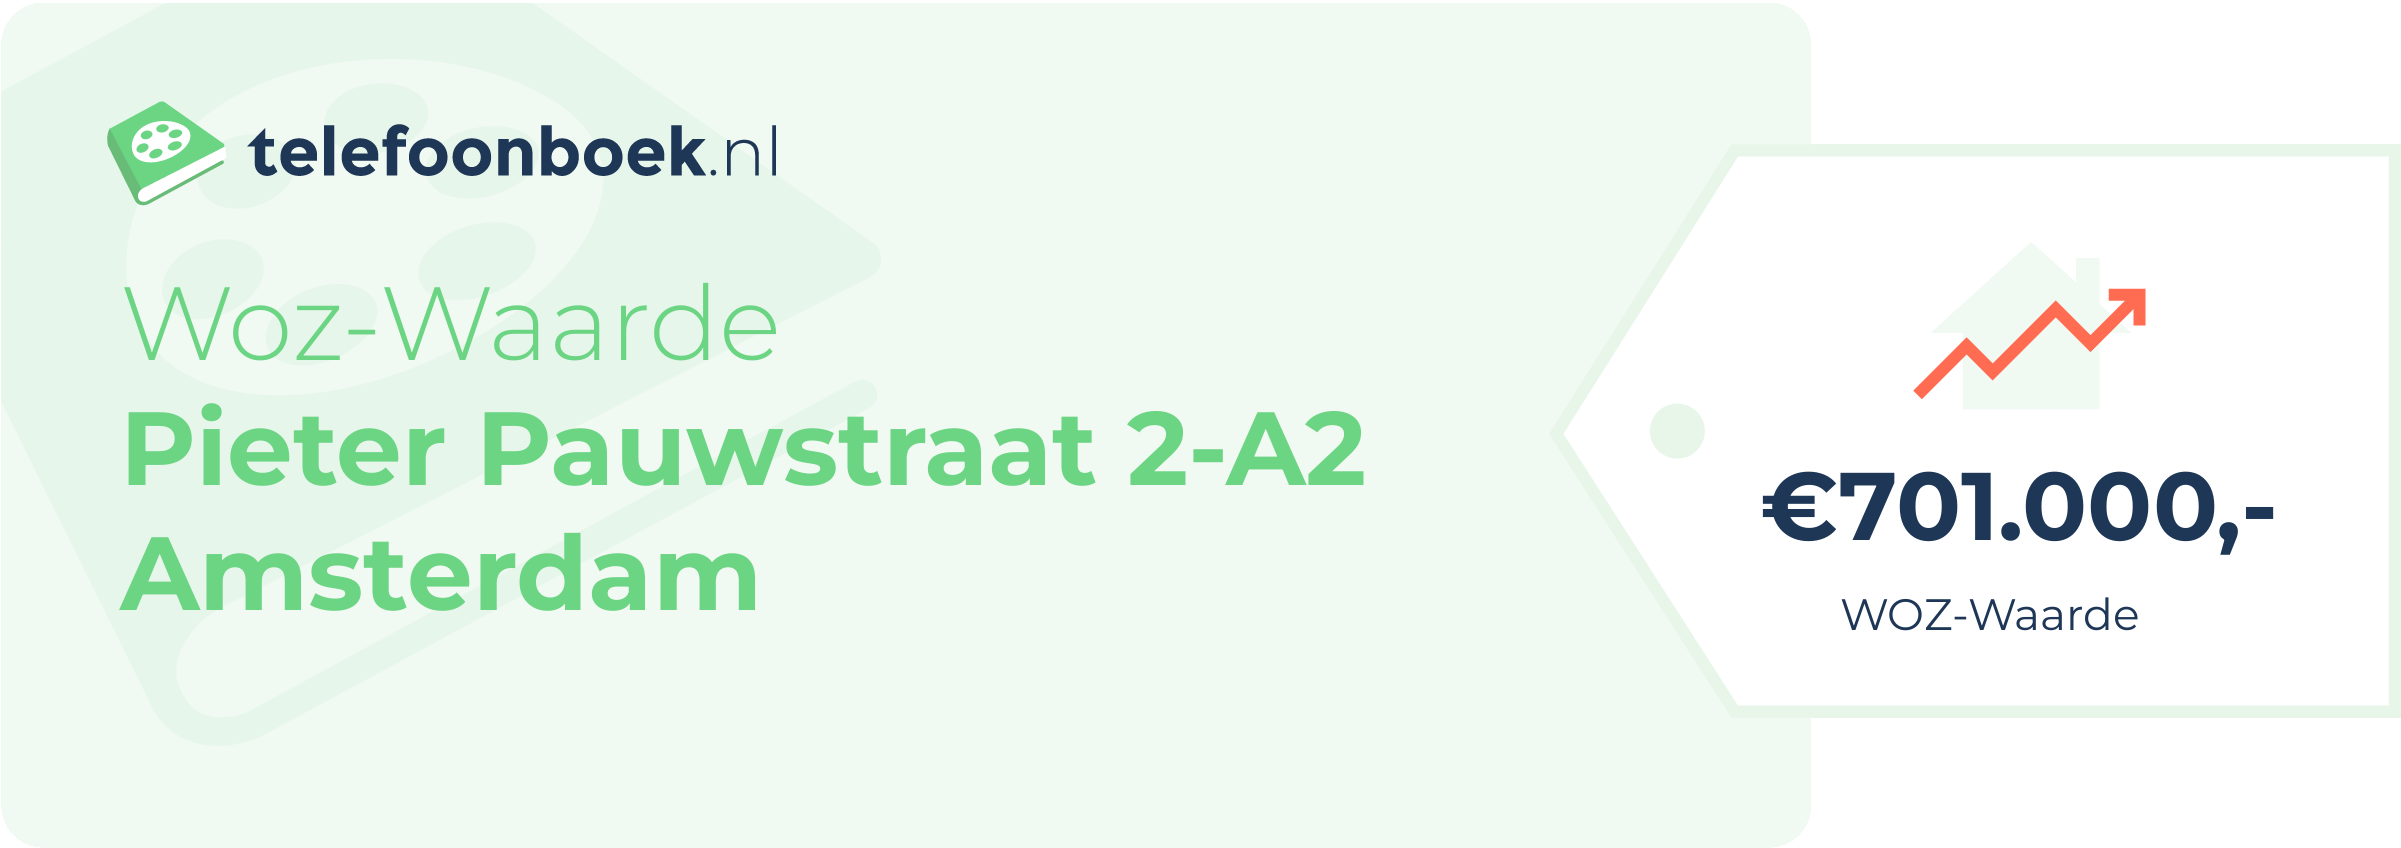 WOZ-waarde Pieter Pauwstraat 2-A2 Amsterdam